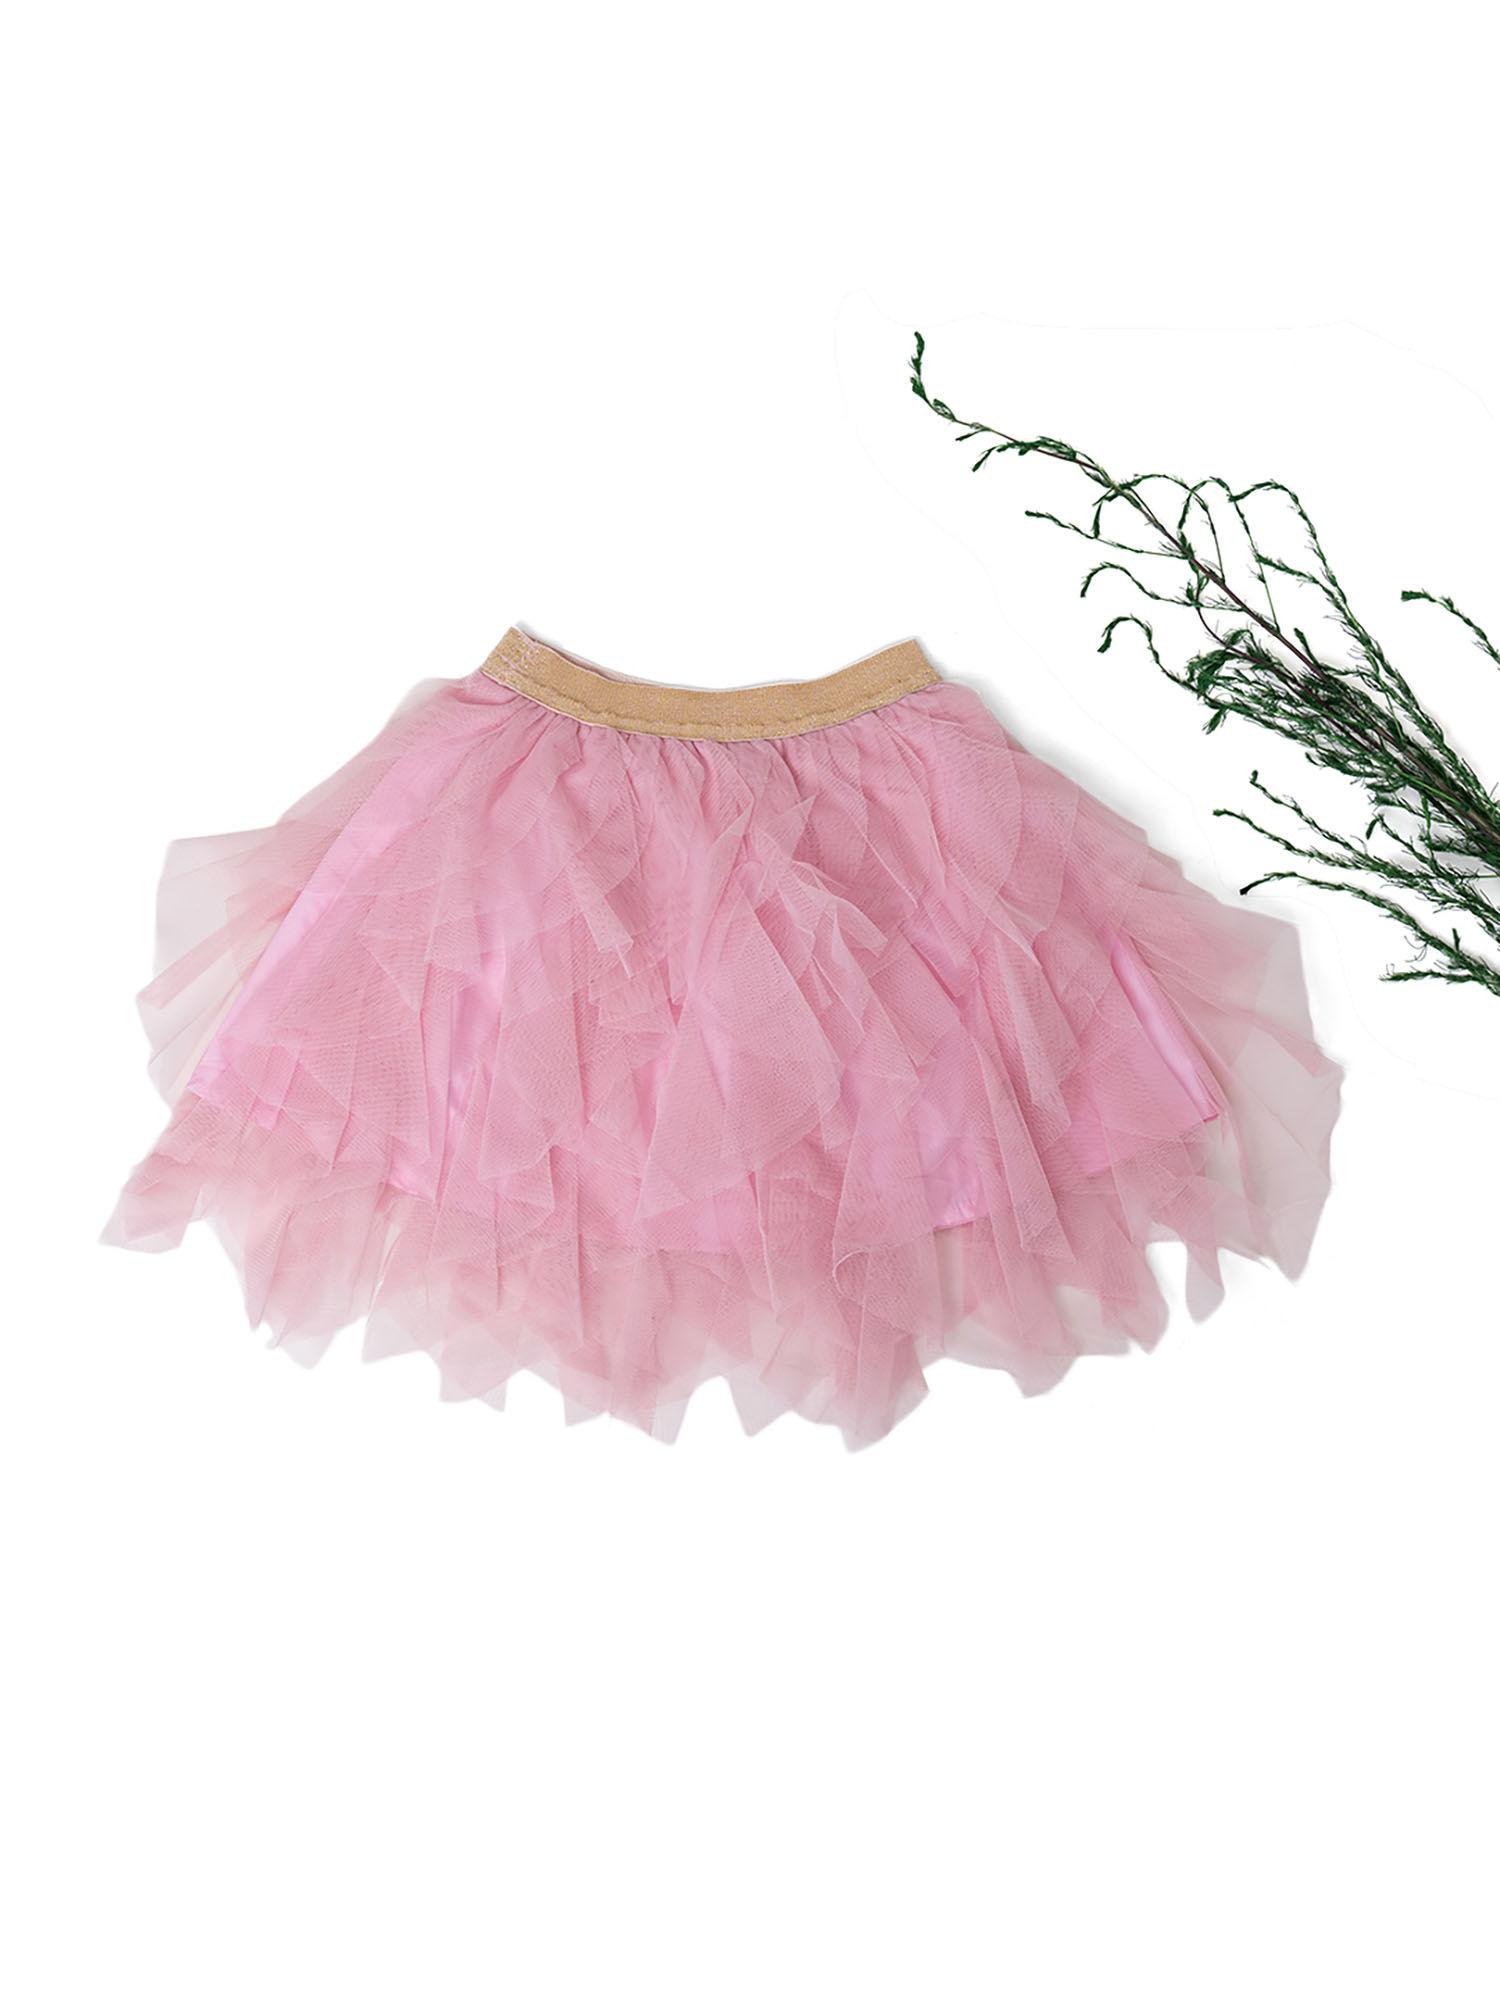 pink-waterfall-tutu-skirt